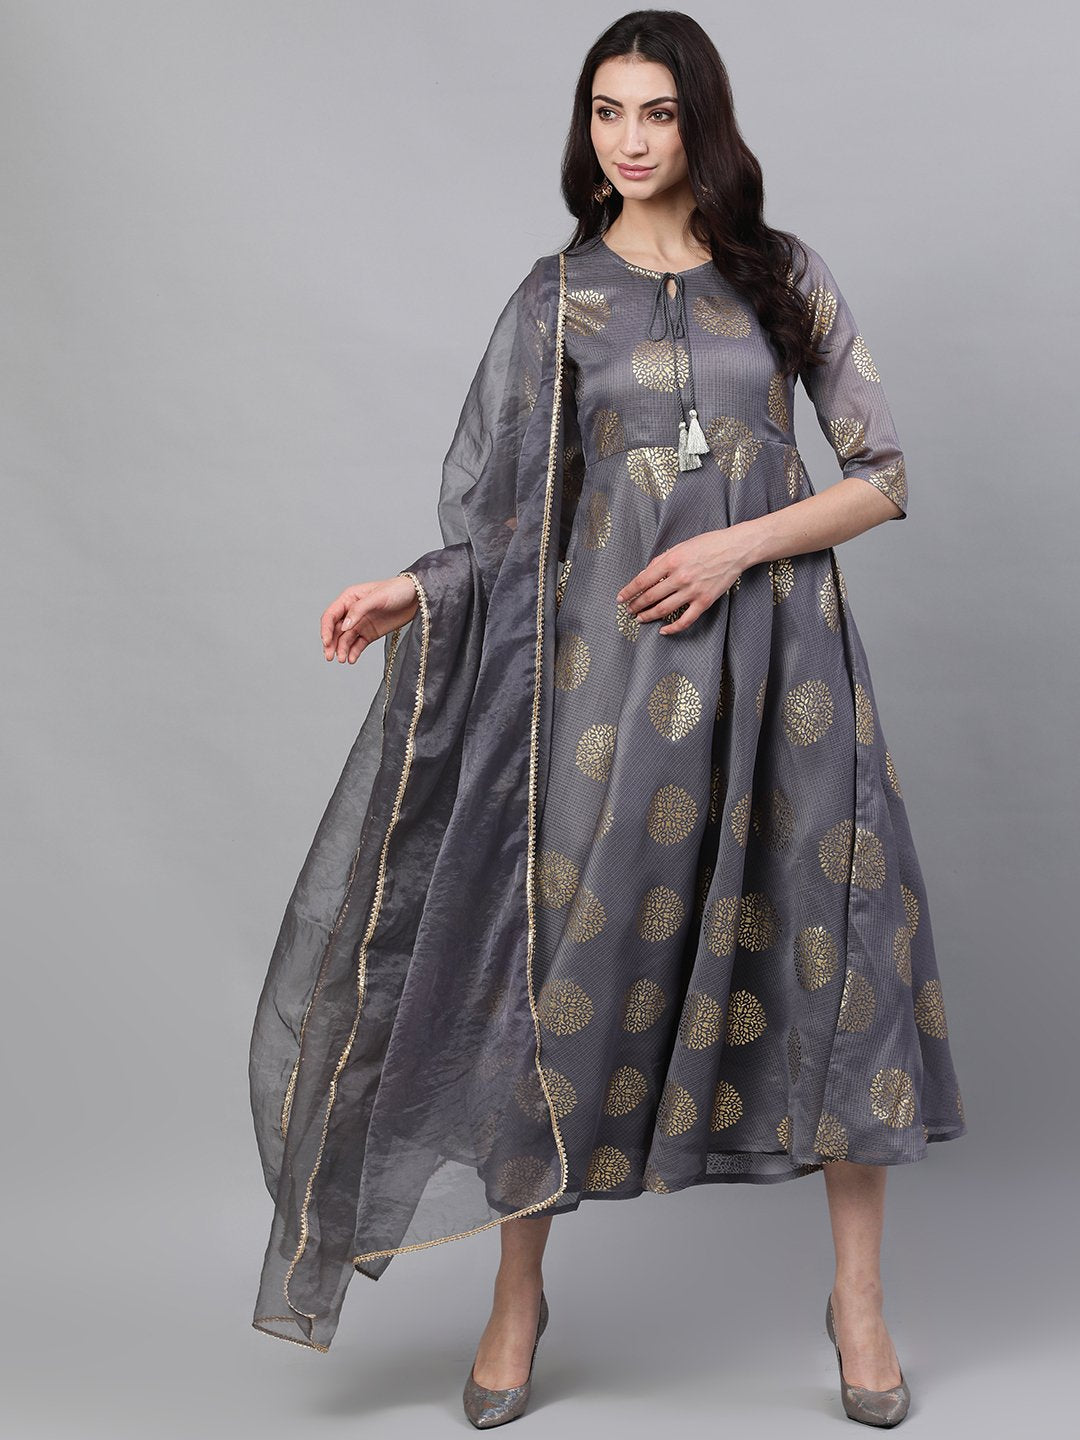 Women's Grey Ethnic Motifs Printed Tie-Up Neck Cotton Maxi Dress With Dupatta - Nayo Clothing